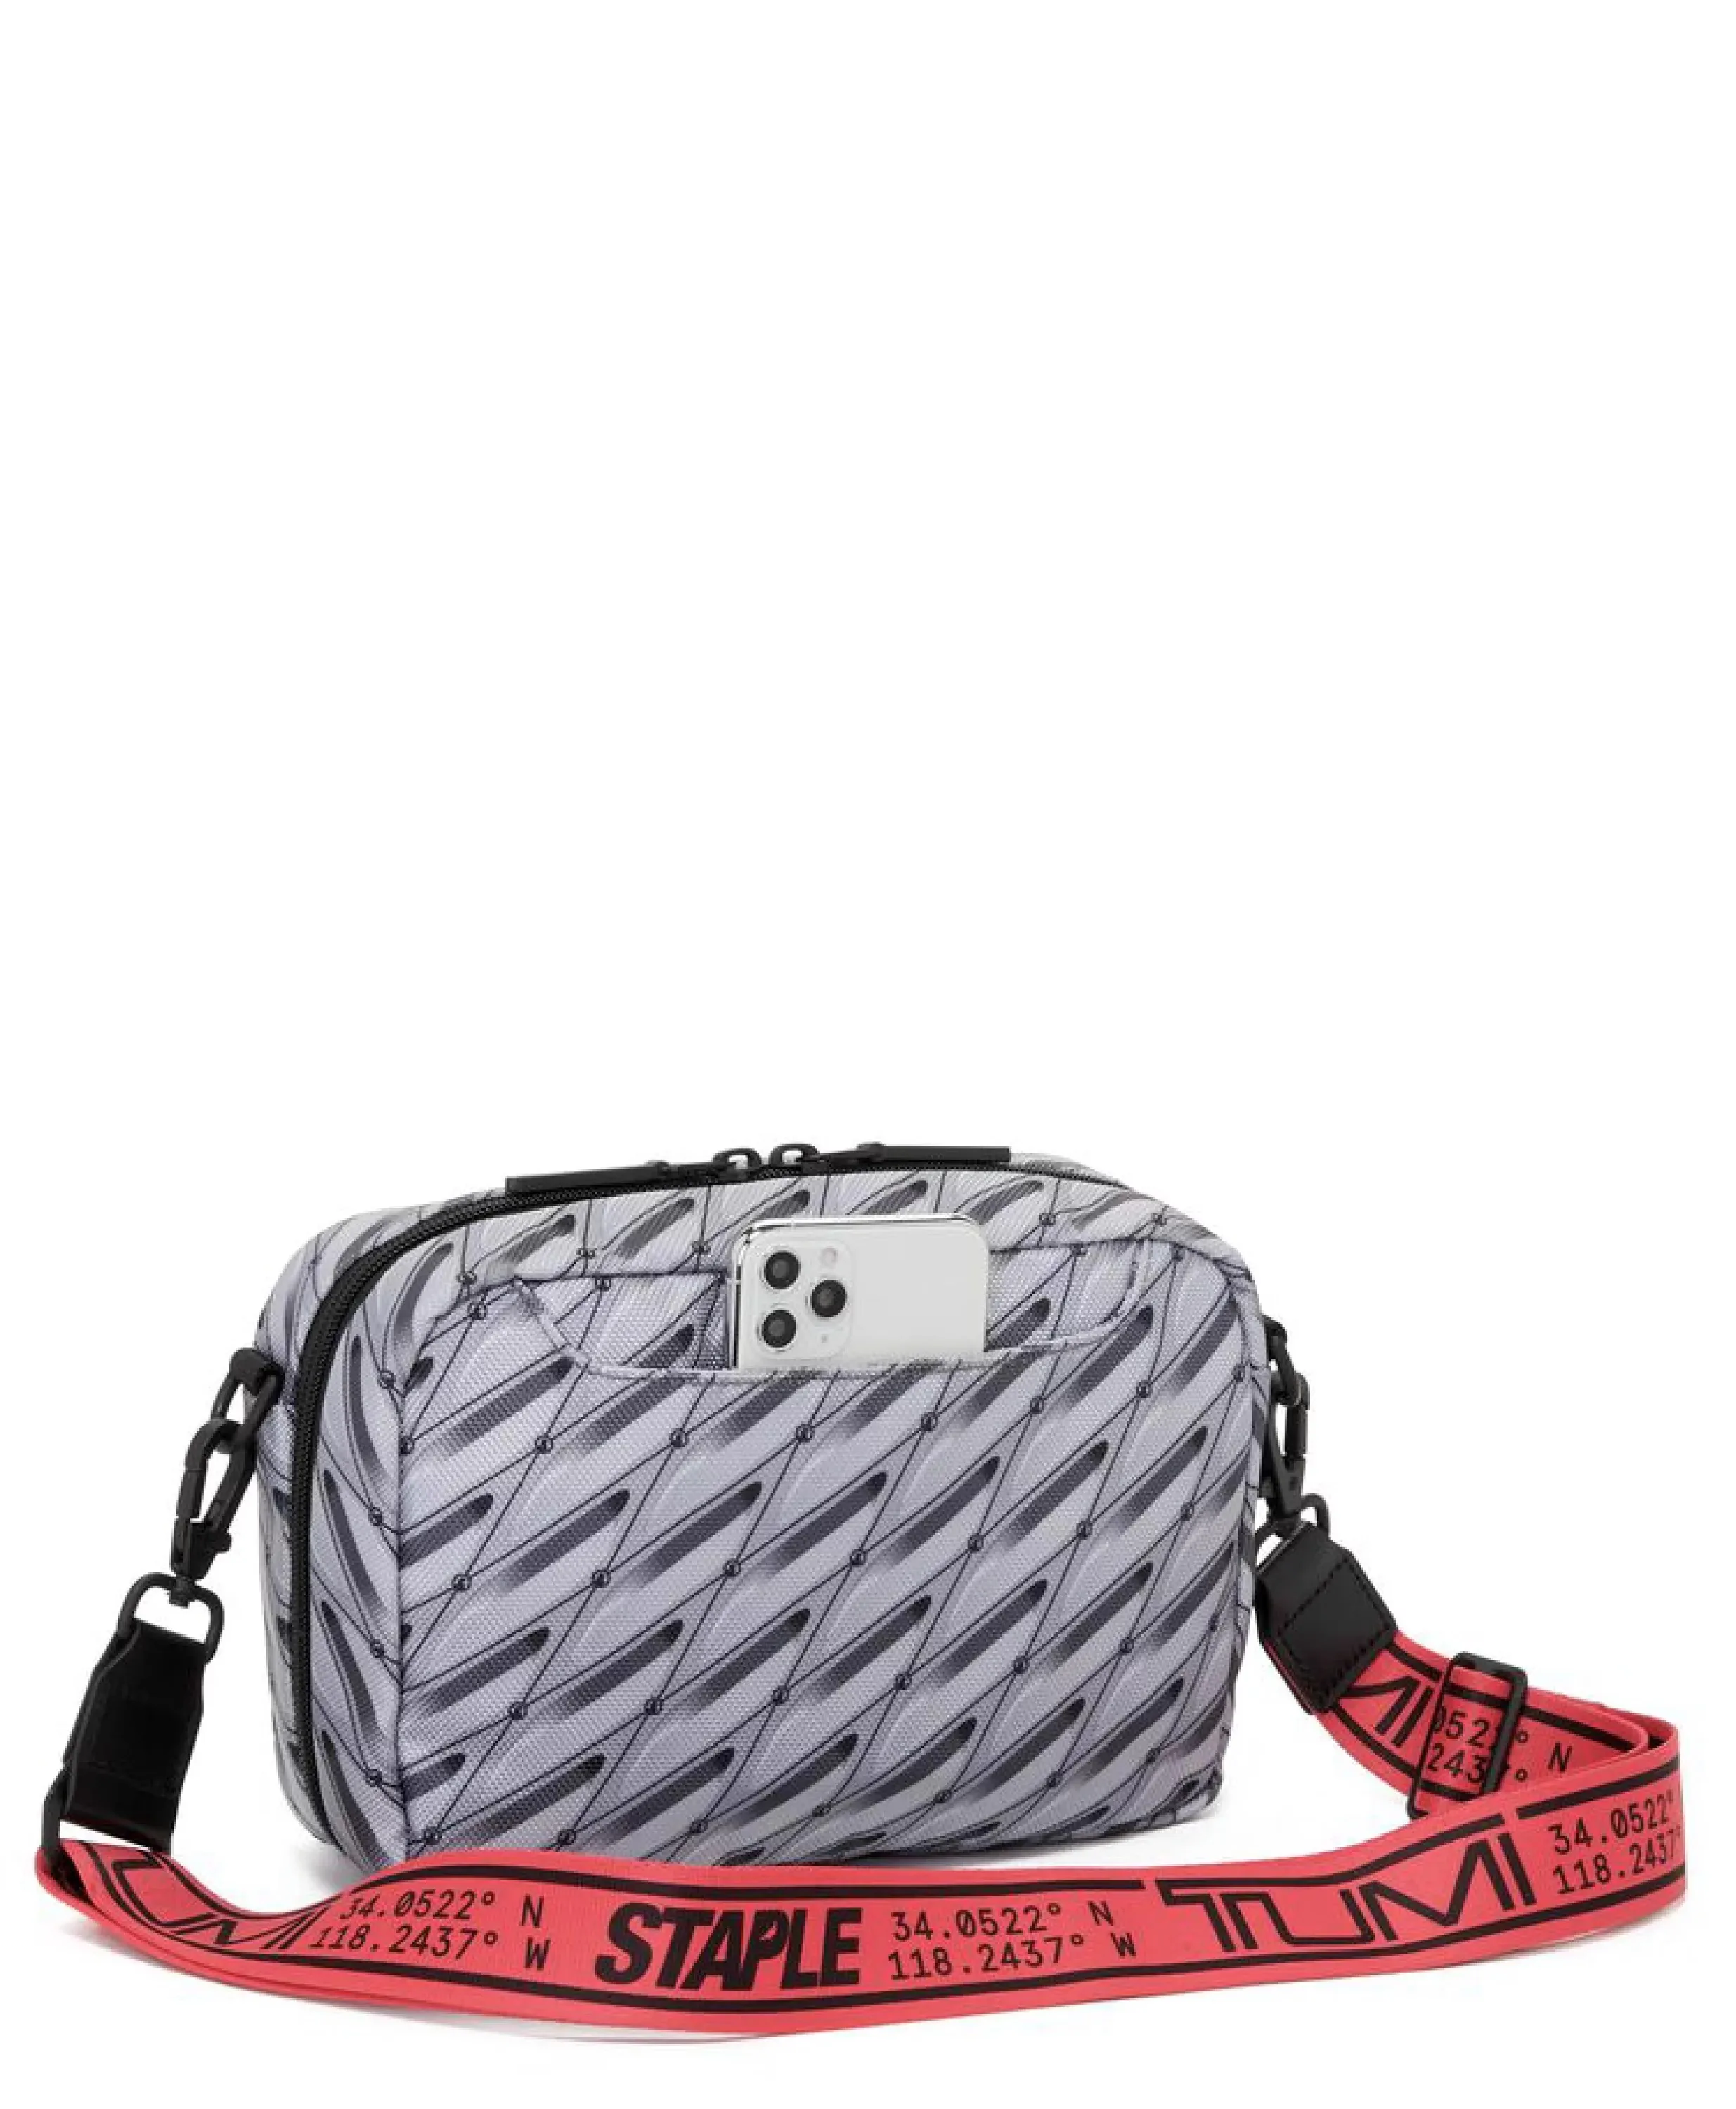 

Tumi Ballistic nylon shoulder bag for men's Staple co branded series women's universal casual fashion crossbody bag